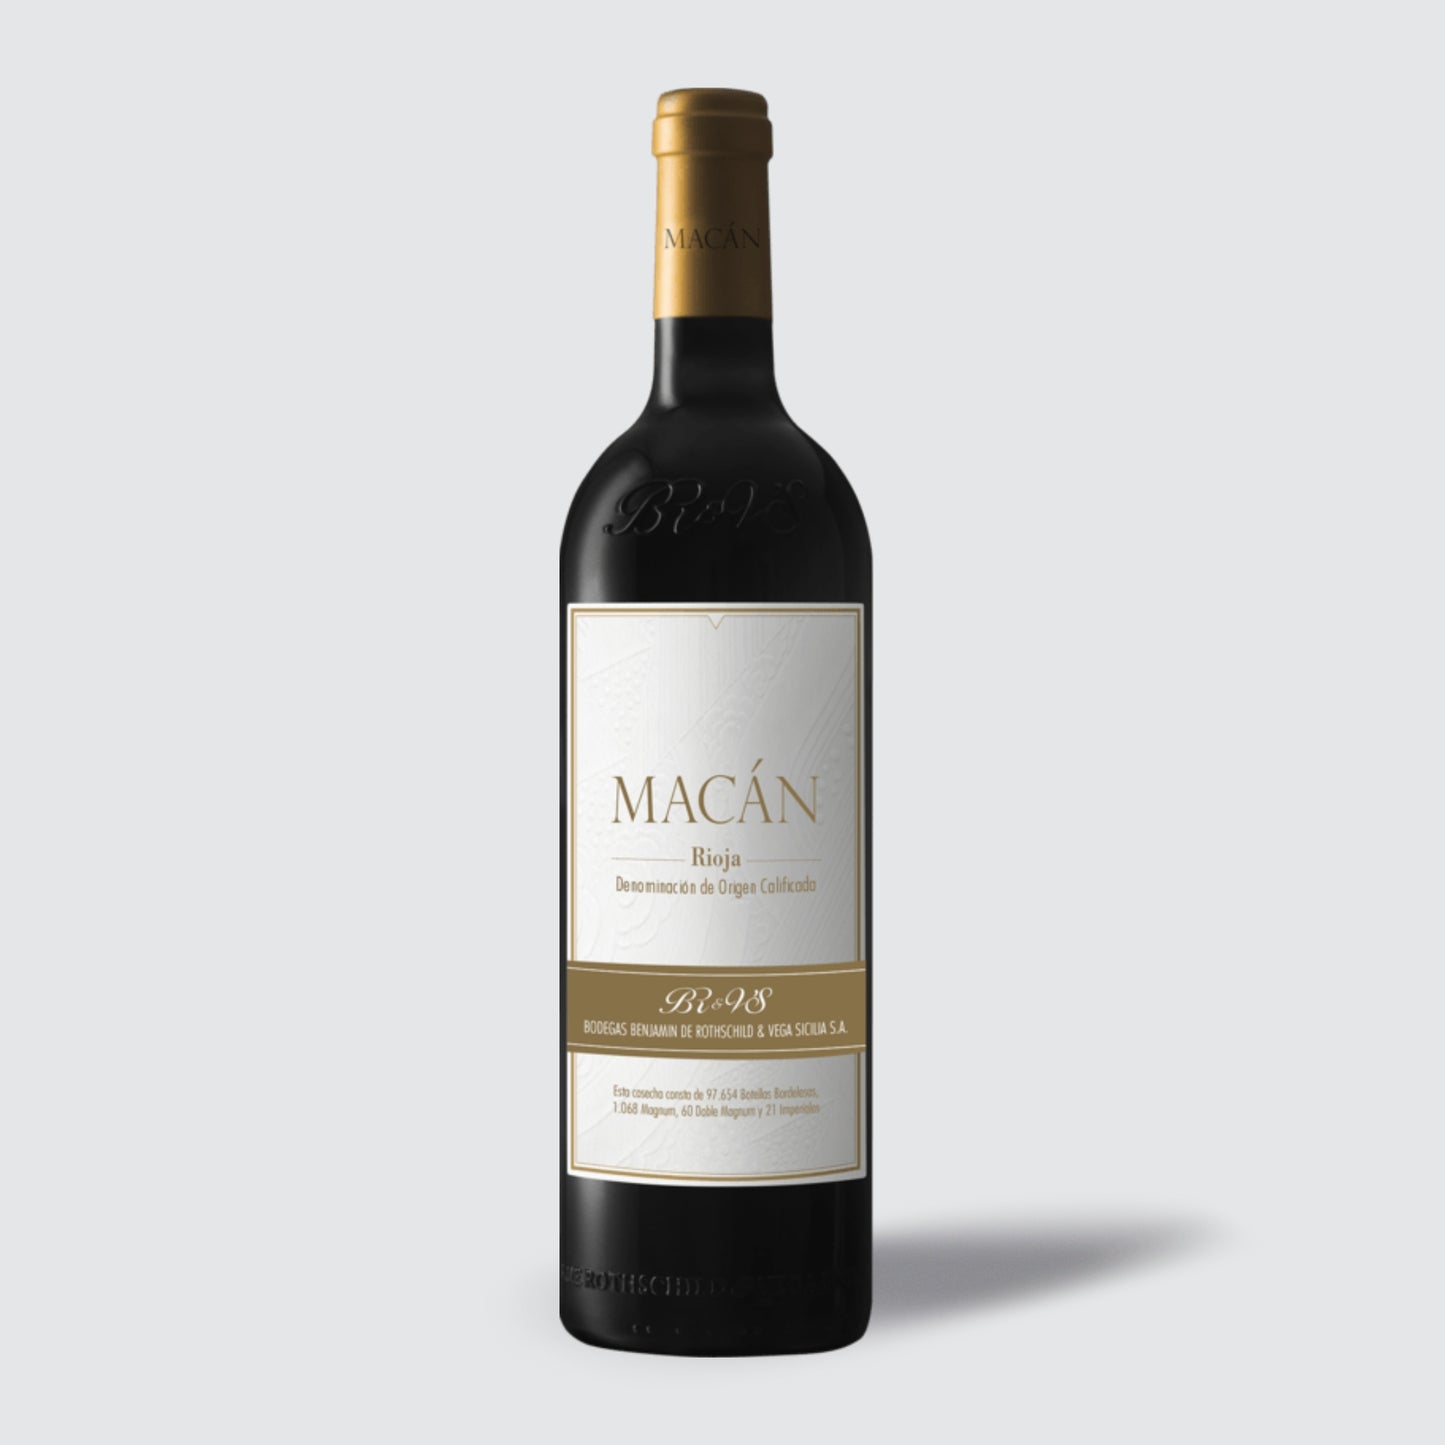 Vega Sicilia and Benjamin de Rothschild Macan Rioja Red Wine